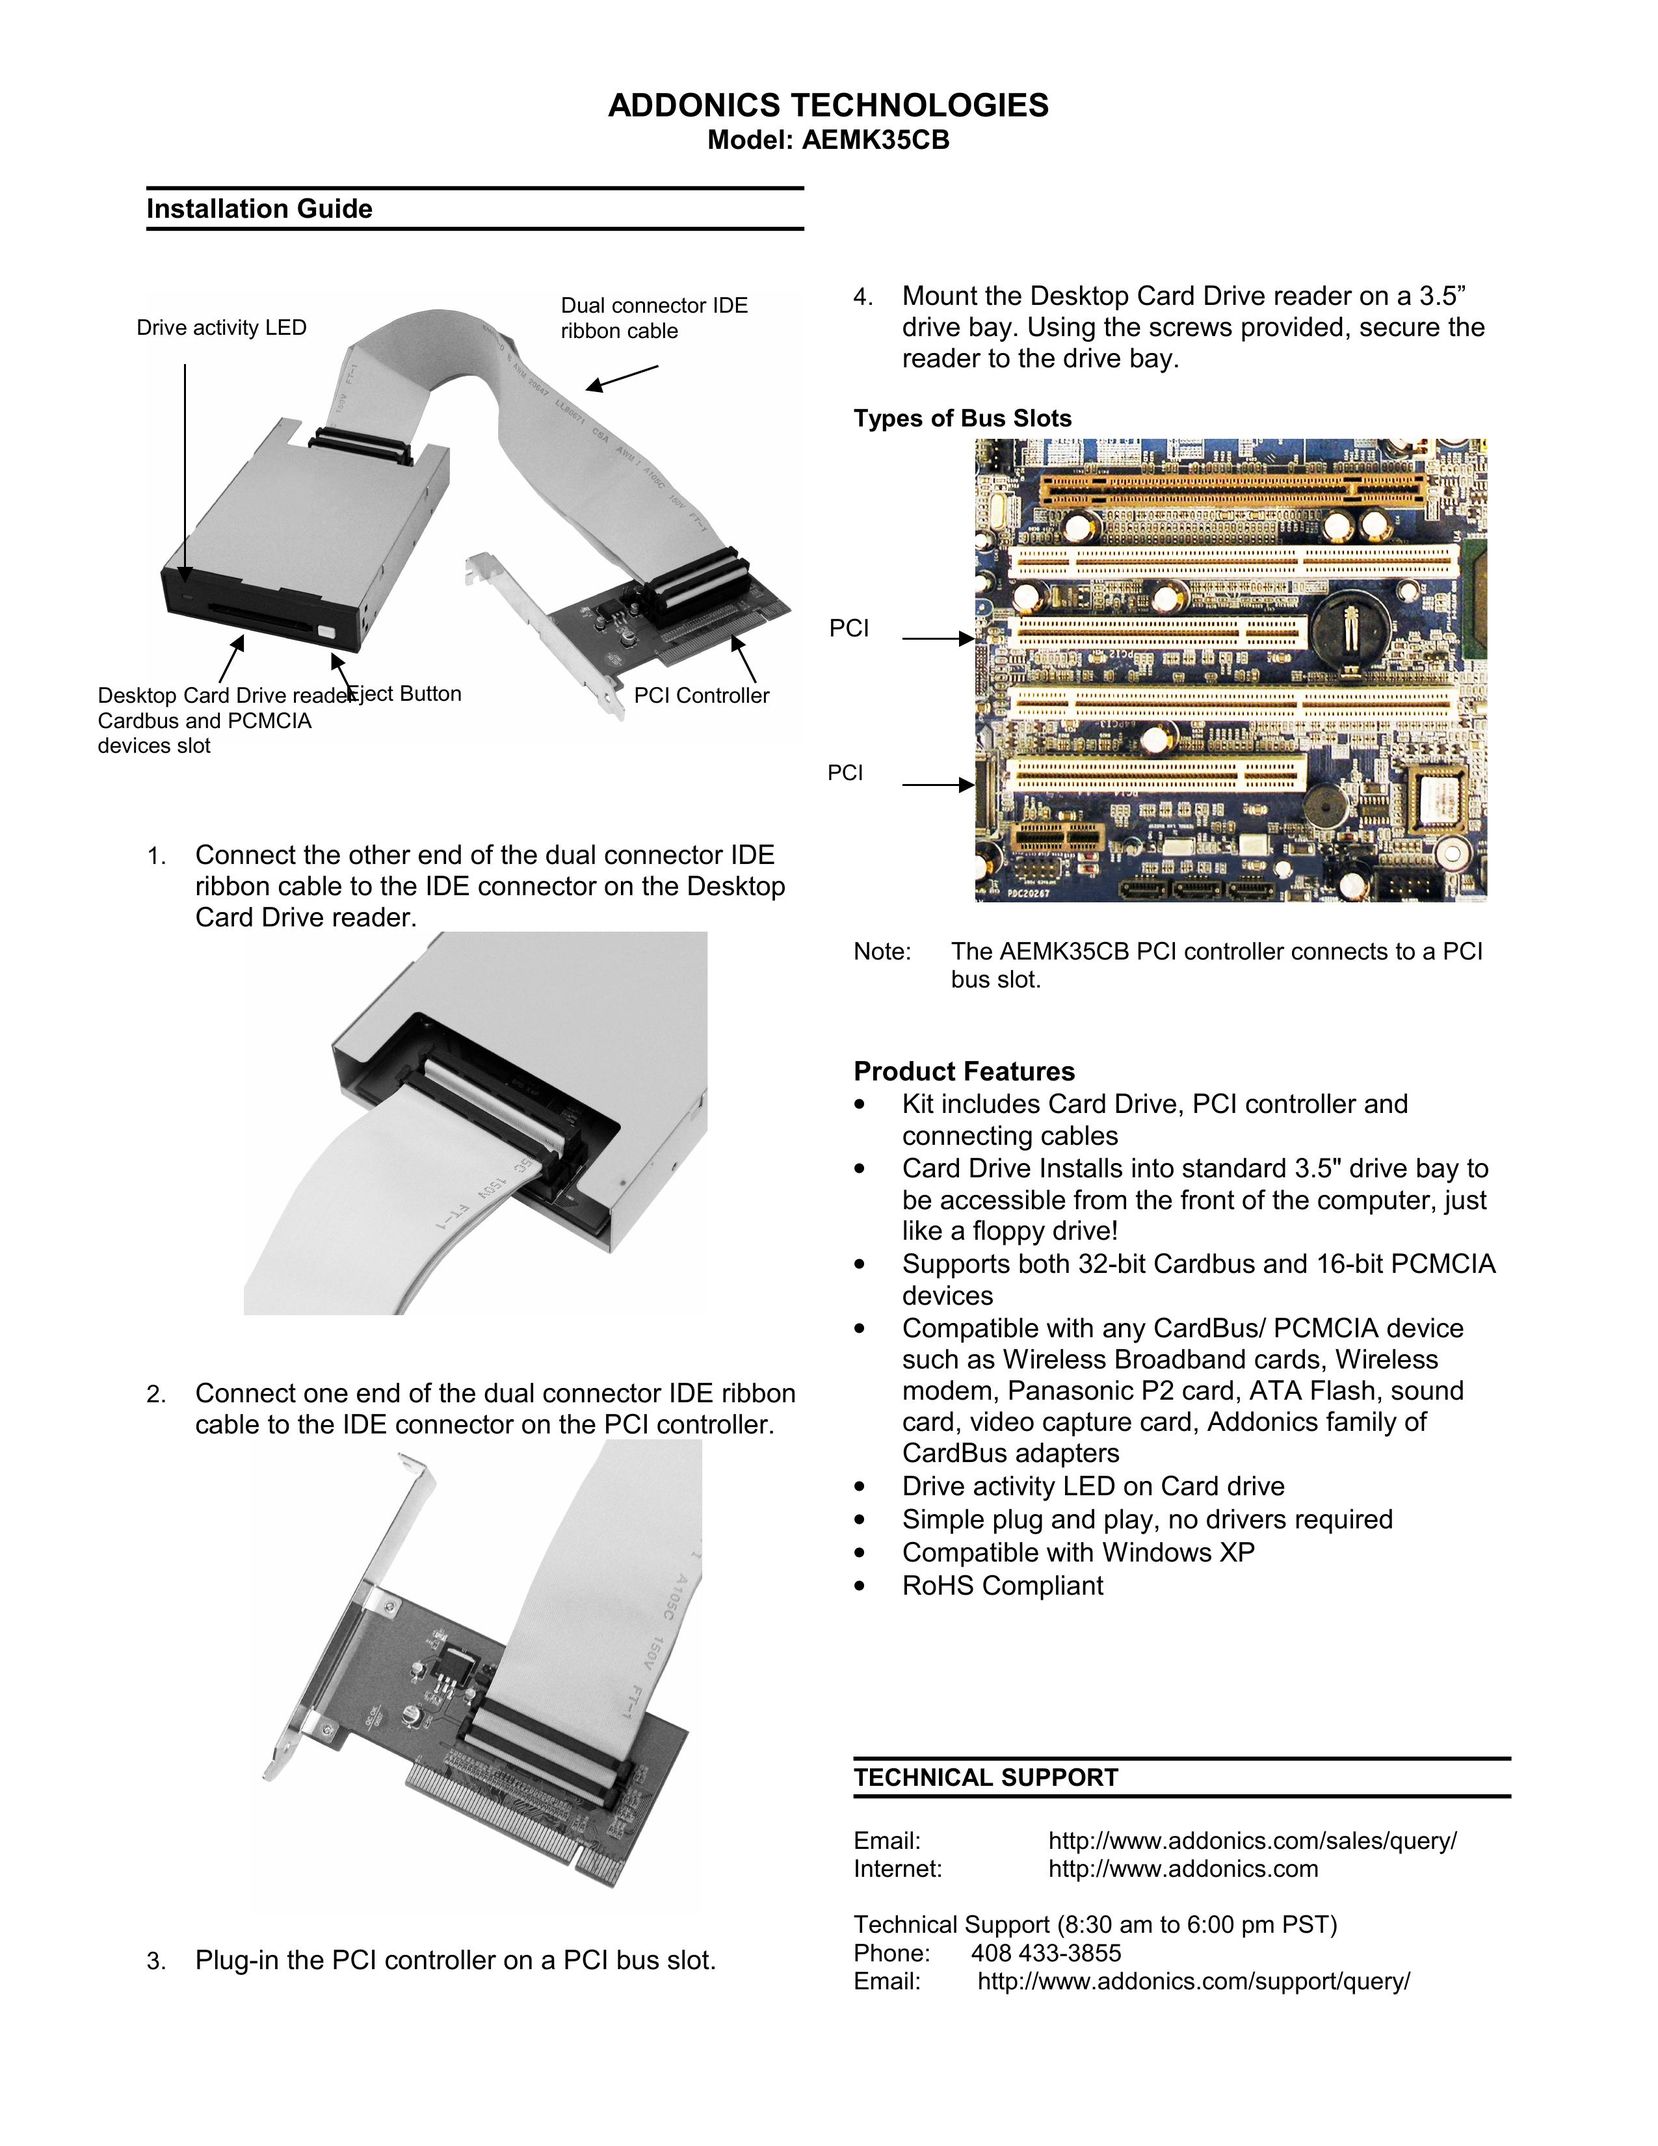 Addonics Technologies AEMK35CB Computer Hardware User Manual